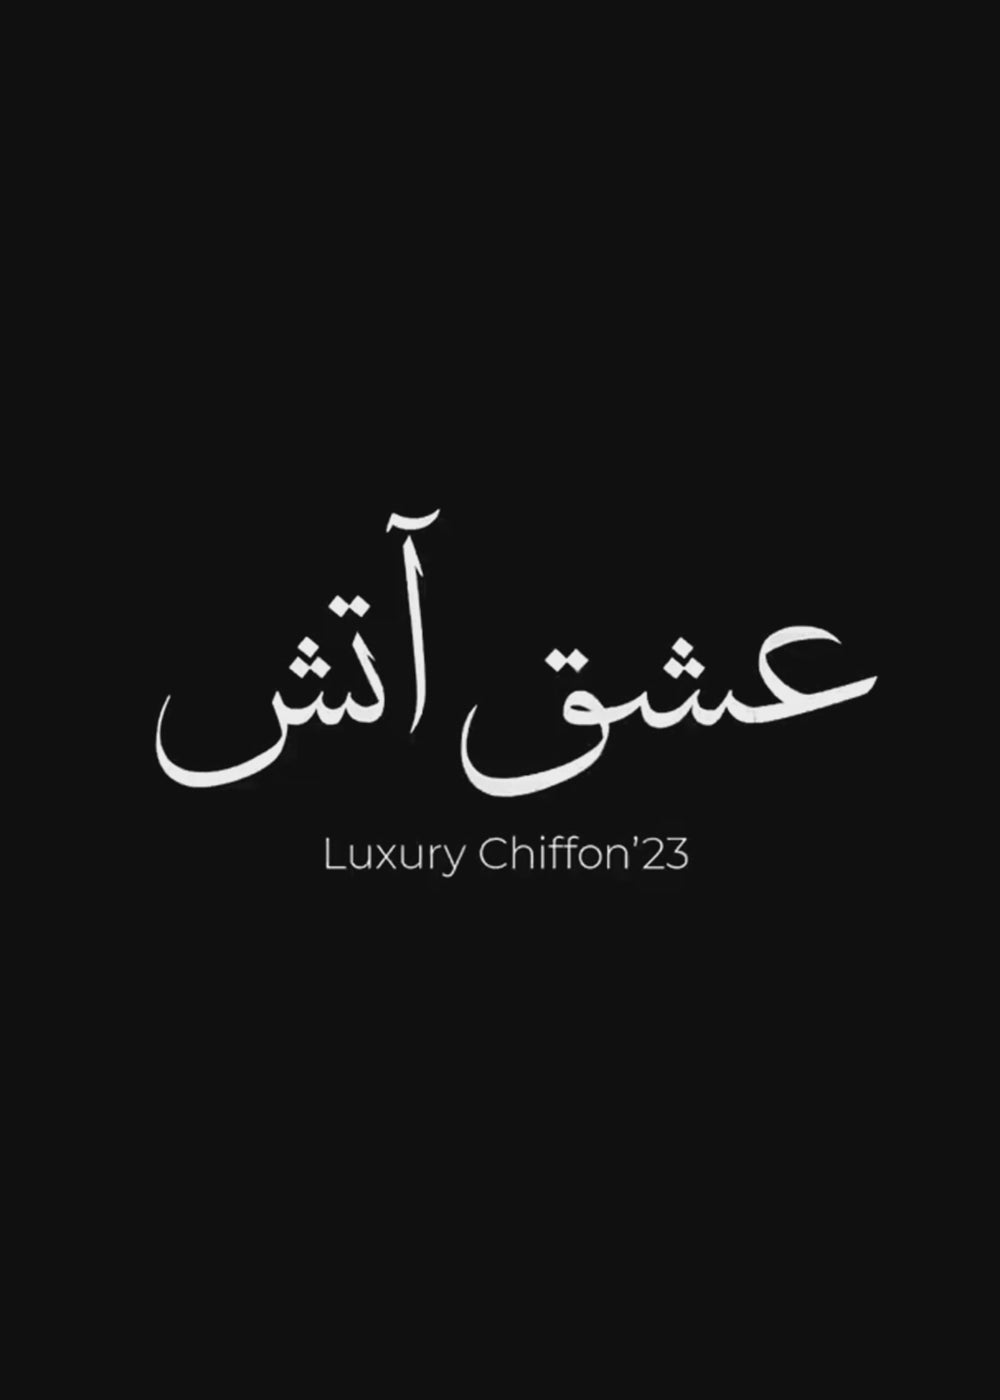 Buy Now Ishq Aatish Luxury Chiffon '23 by Emaan Adeel | FARAH Online in USA, UK, Canada & Worldwide at Empress Clothing. 